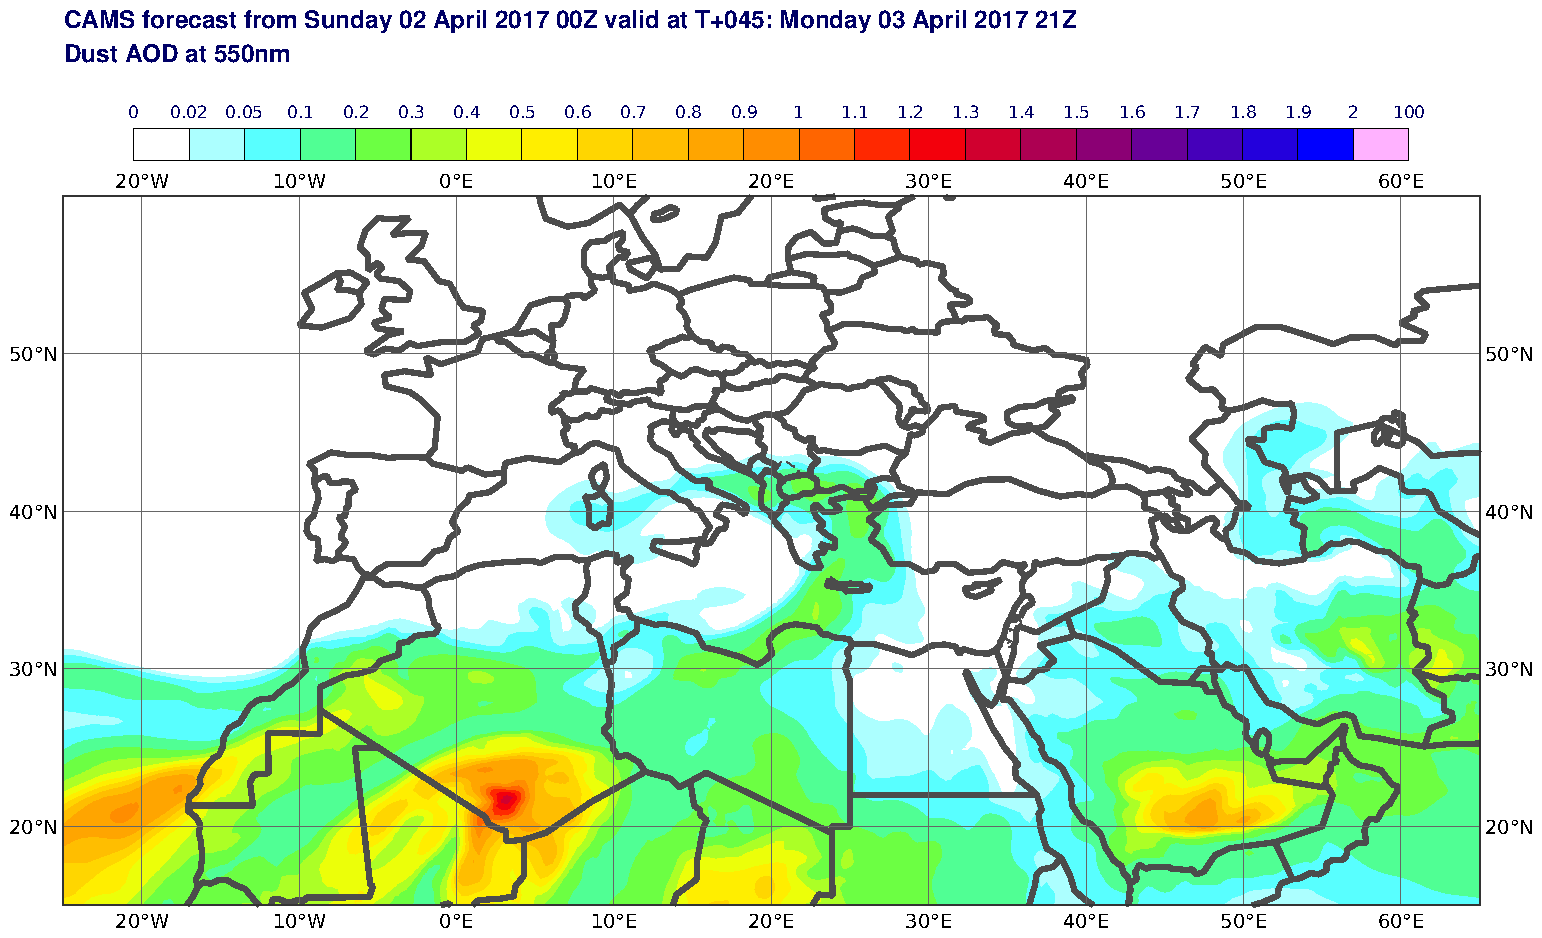 Dust AOD at 550nm valid at T45 - 2017-04-03 21:00